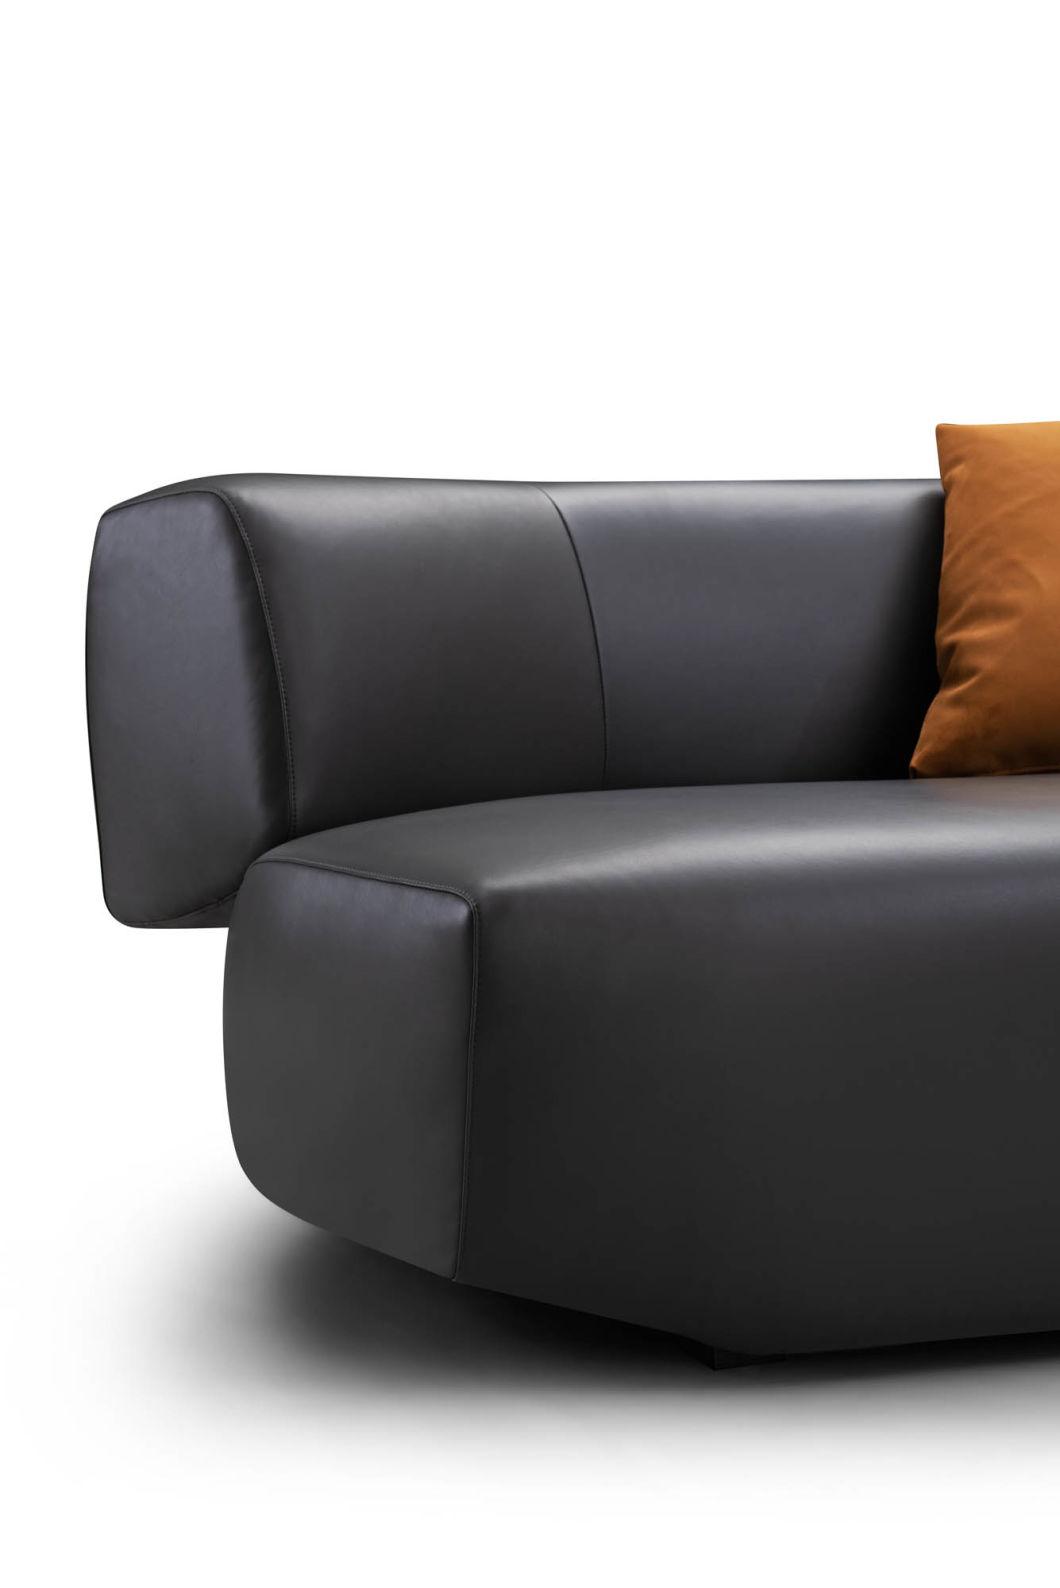 High Quality Modern Leather Sofa 3 Set Living Room Furniture Sofa